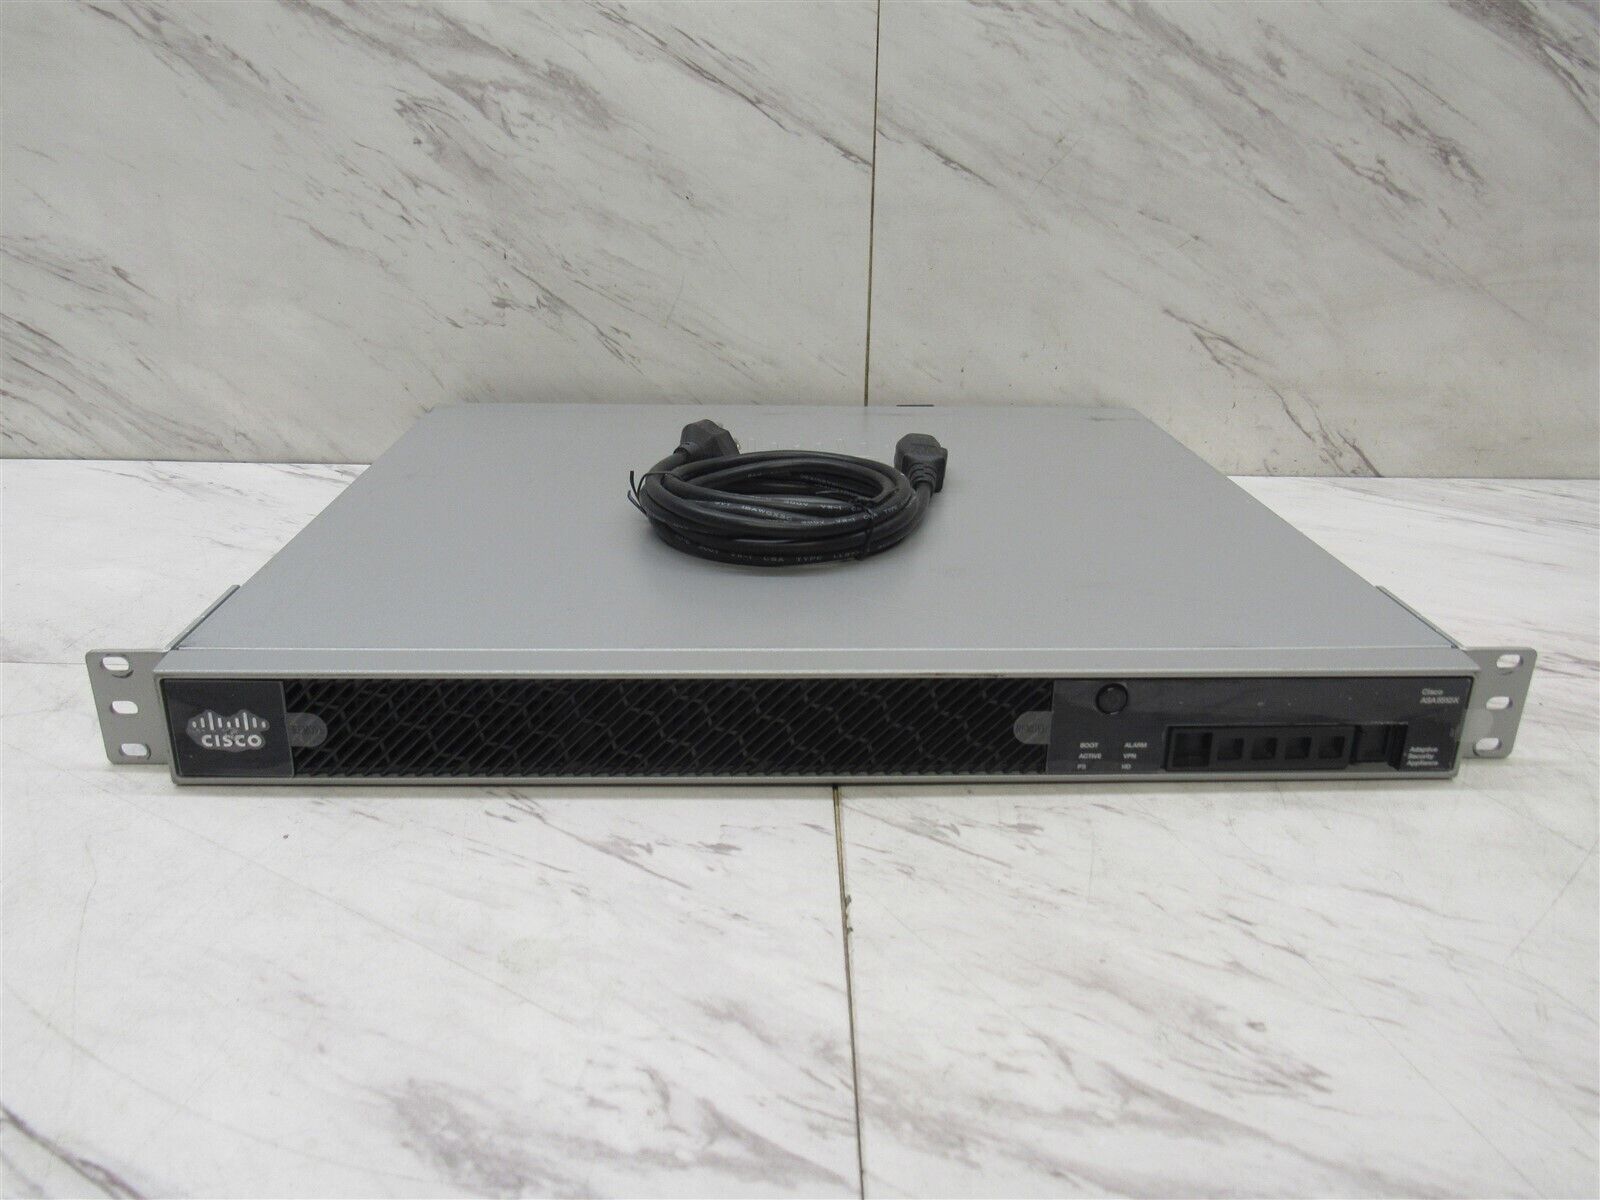 Genuine Cisco ASA5512 Series ASA5512-X Firewall Security Appliance w/ Power Cord